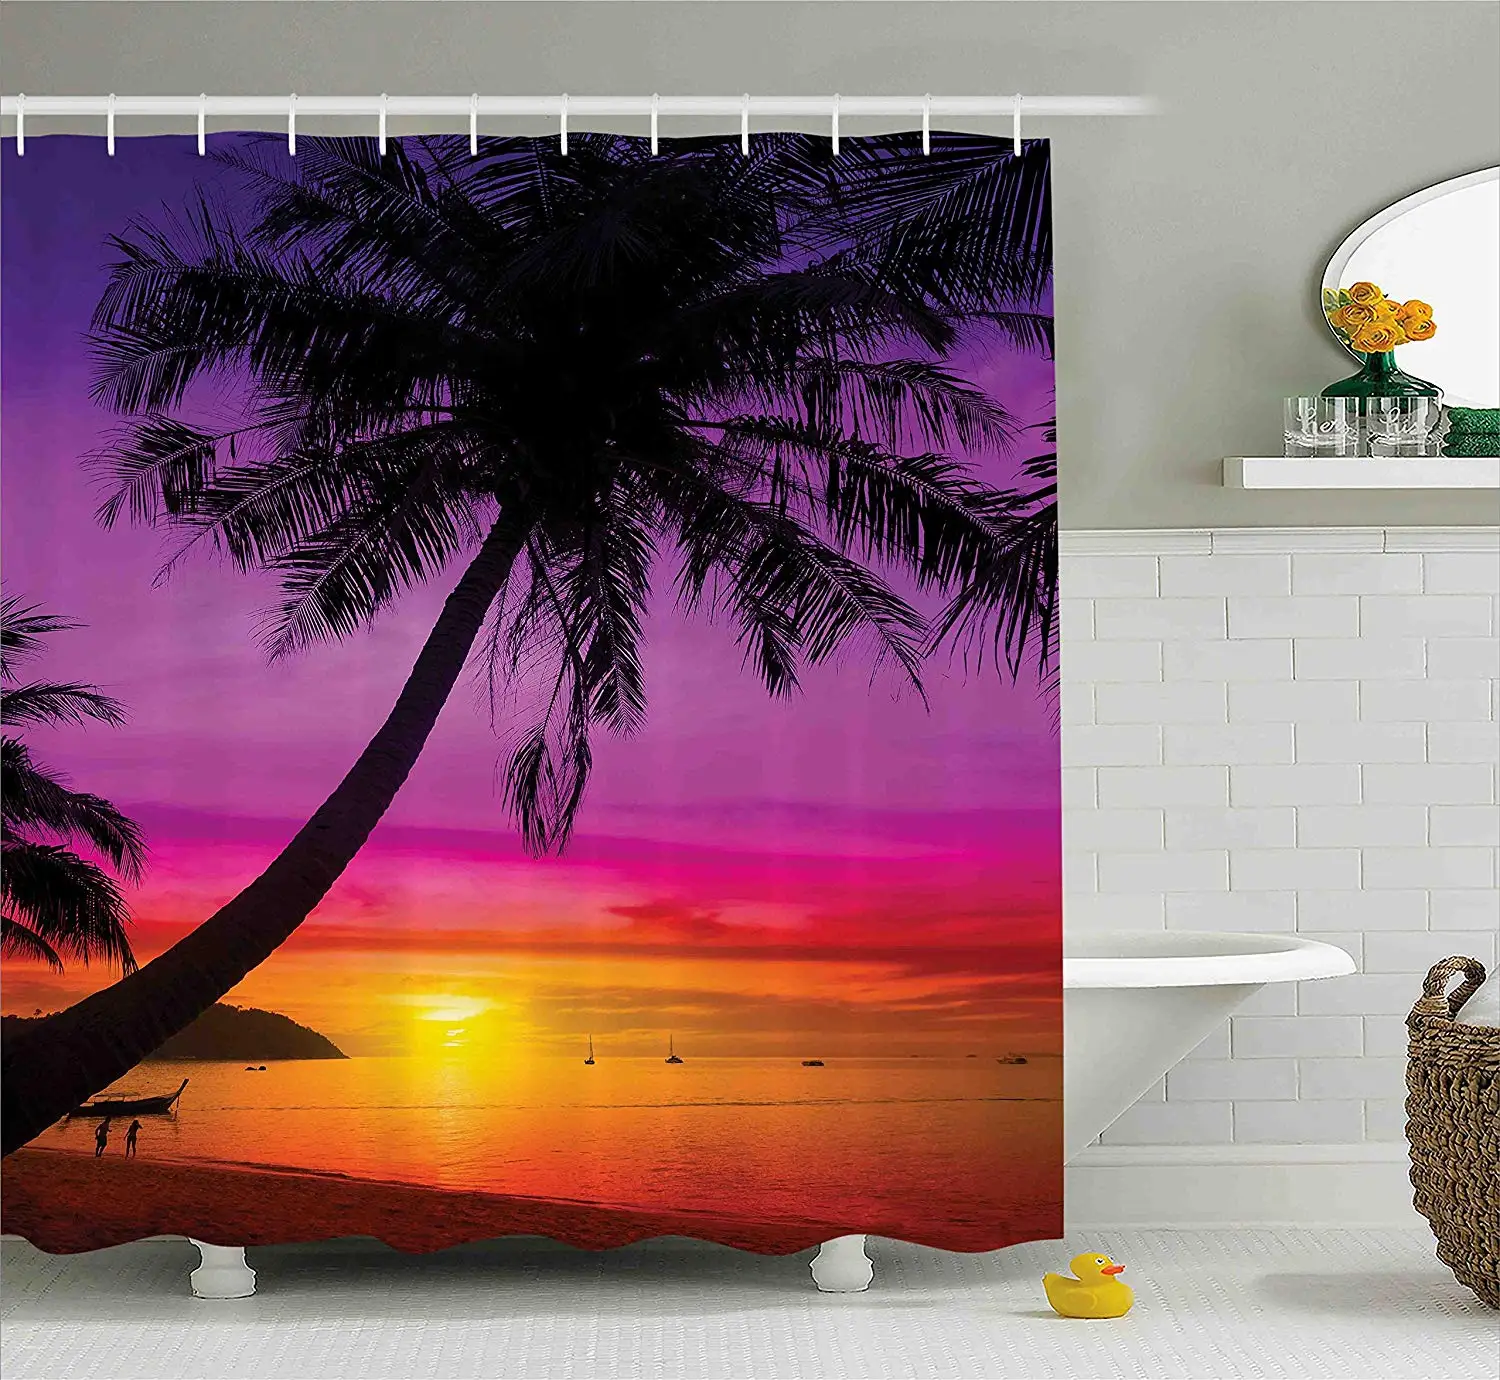 

Tropical Shower Curtain Palm Tree Silhouette on Beach at Sunset Summertime Travel Destination Cloth Fabric Bathroom Decor Set